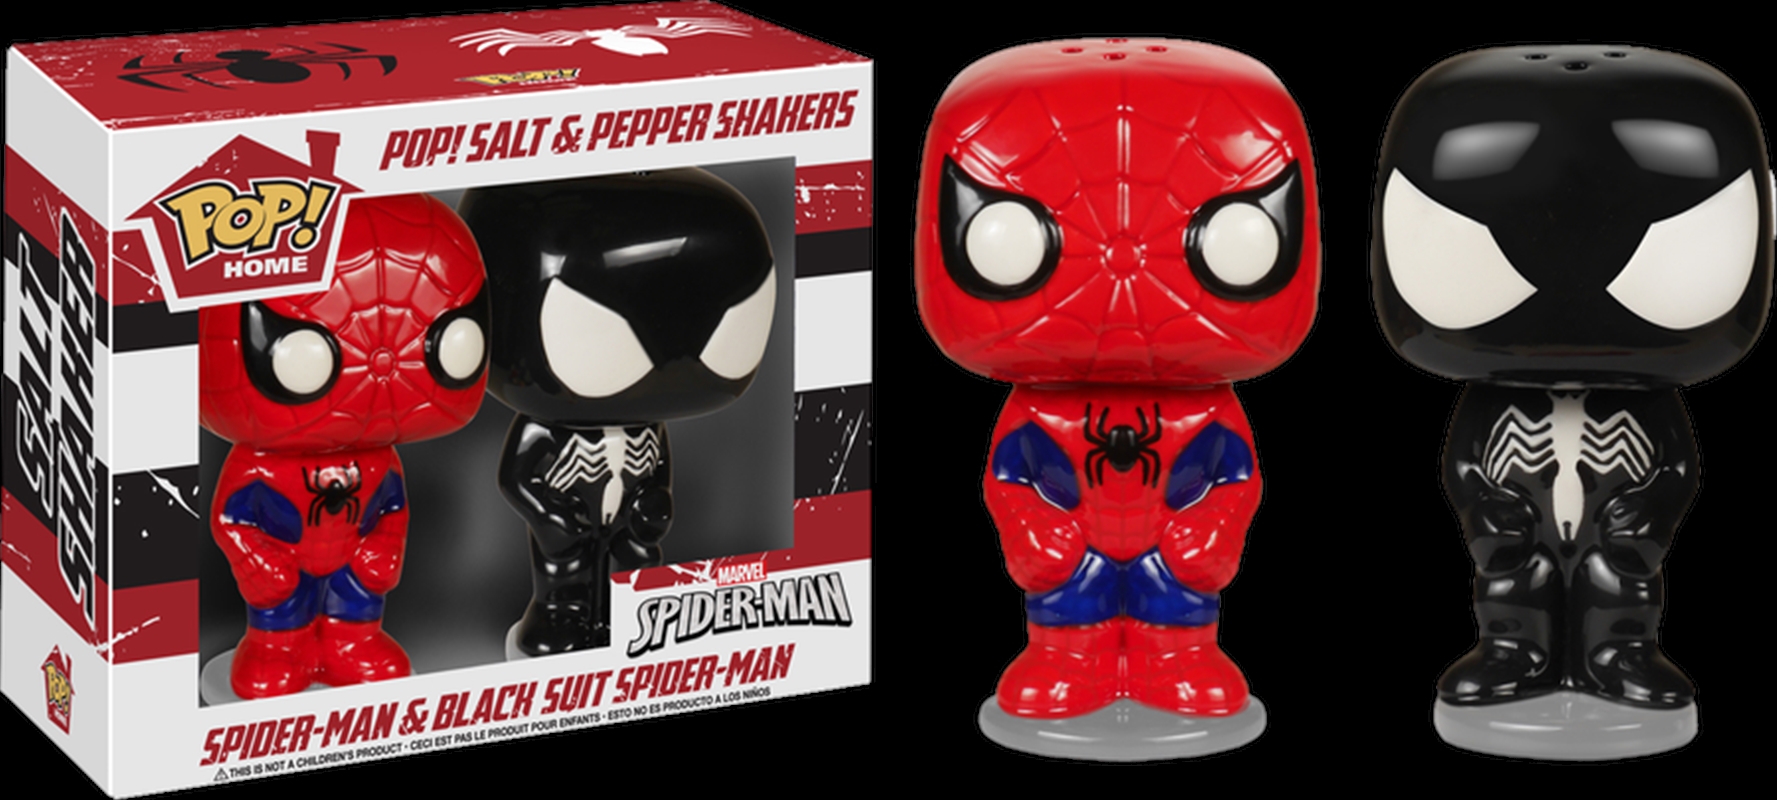 Spider-Man - Pop! Salt & Pepper Shakers/Product Detail/Tableware